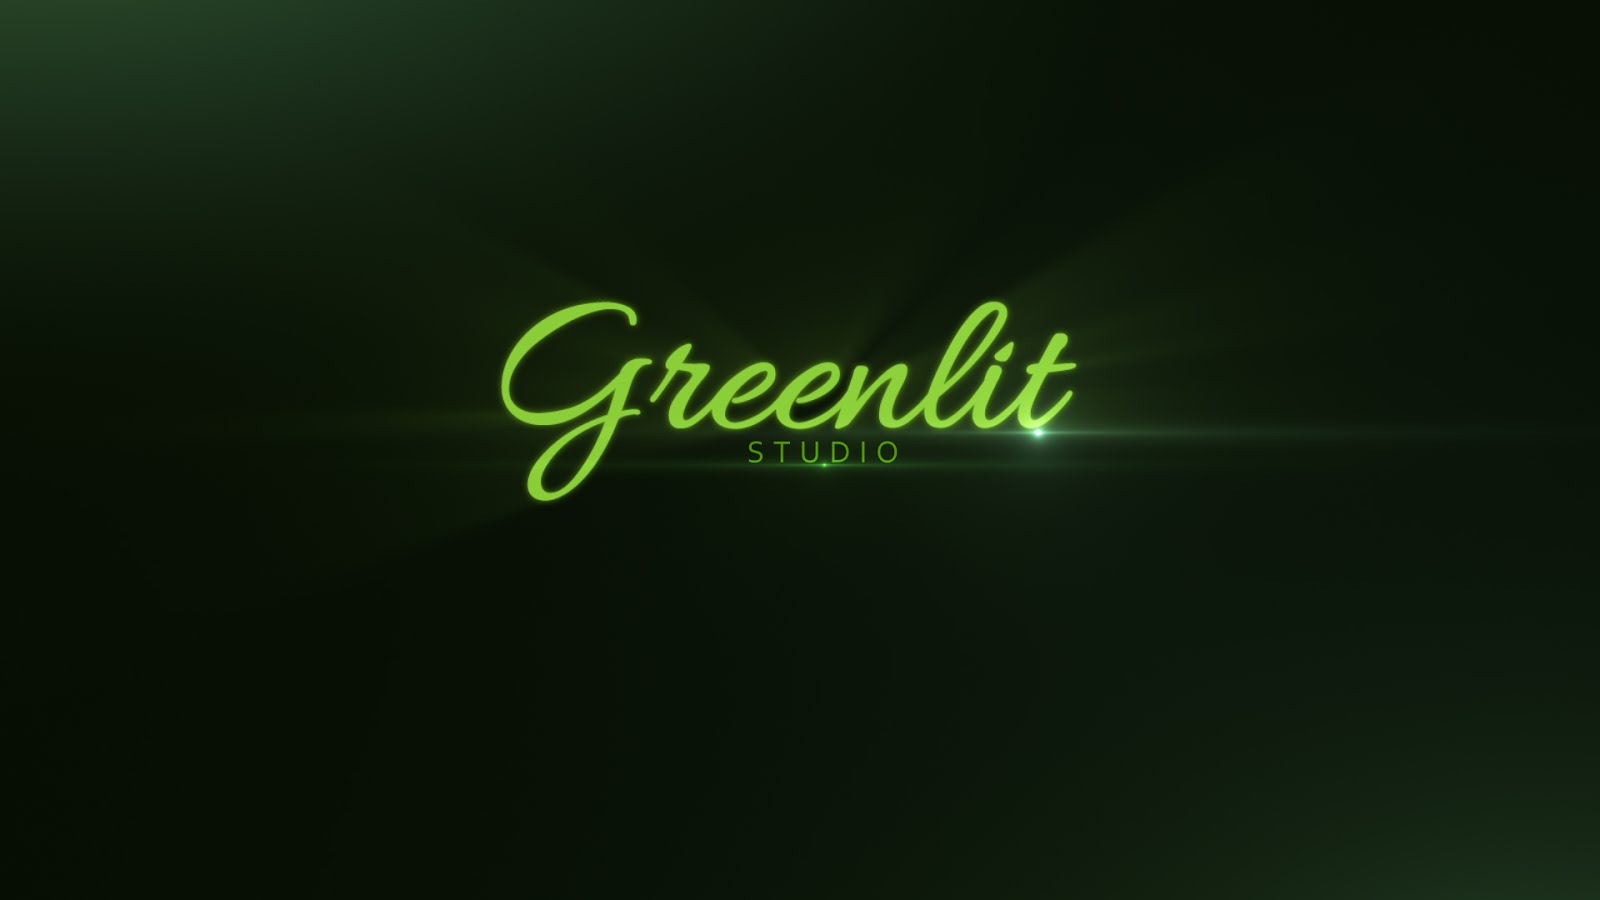 GreenlitStudio Youtube Channel